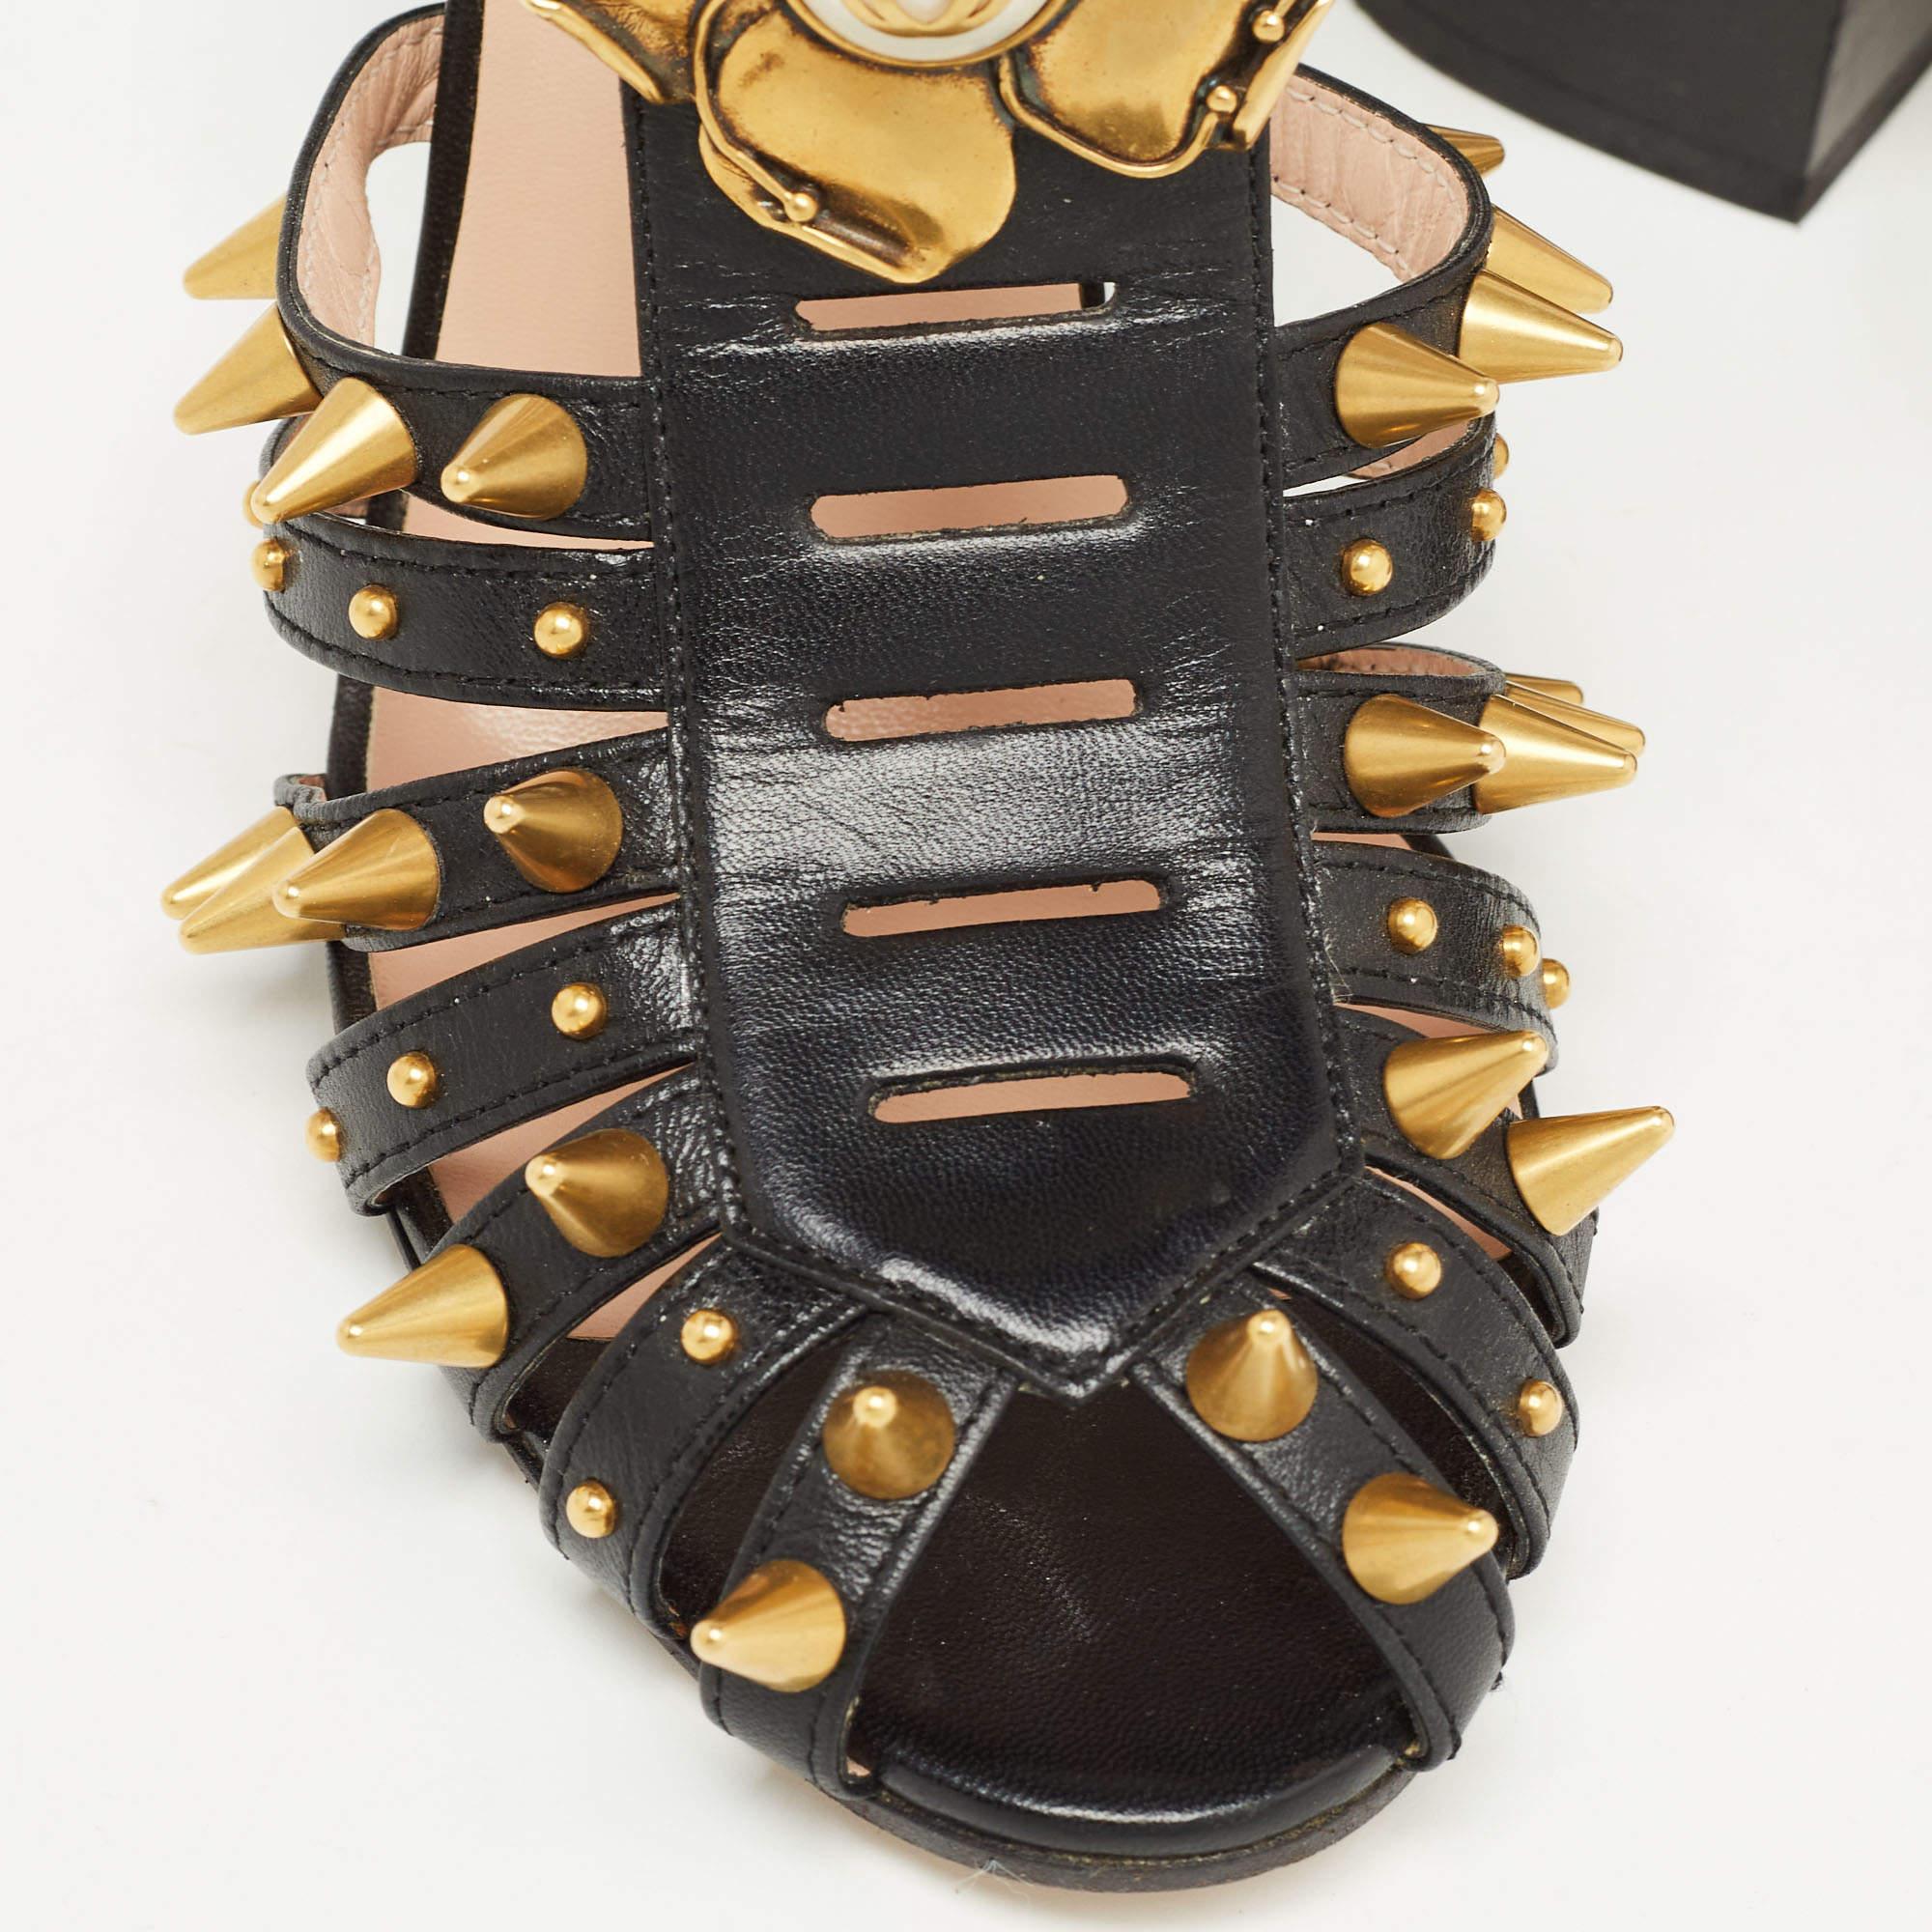 Gucci Black Leather Kendall Embellished Block Heel Ankle Strap Sandals Size 38.5 For Sale 1